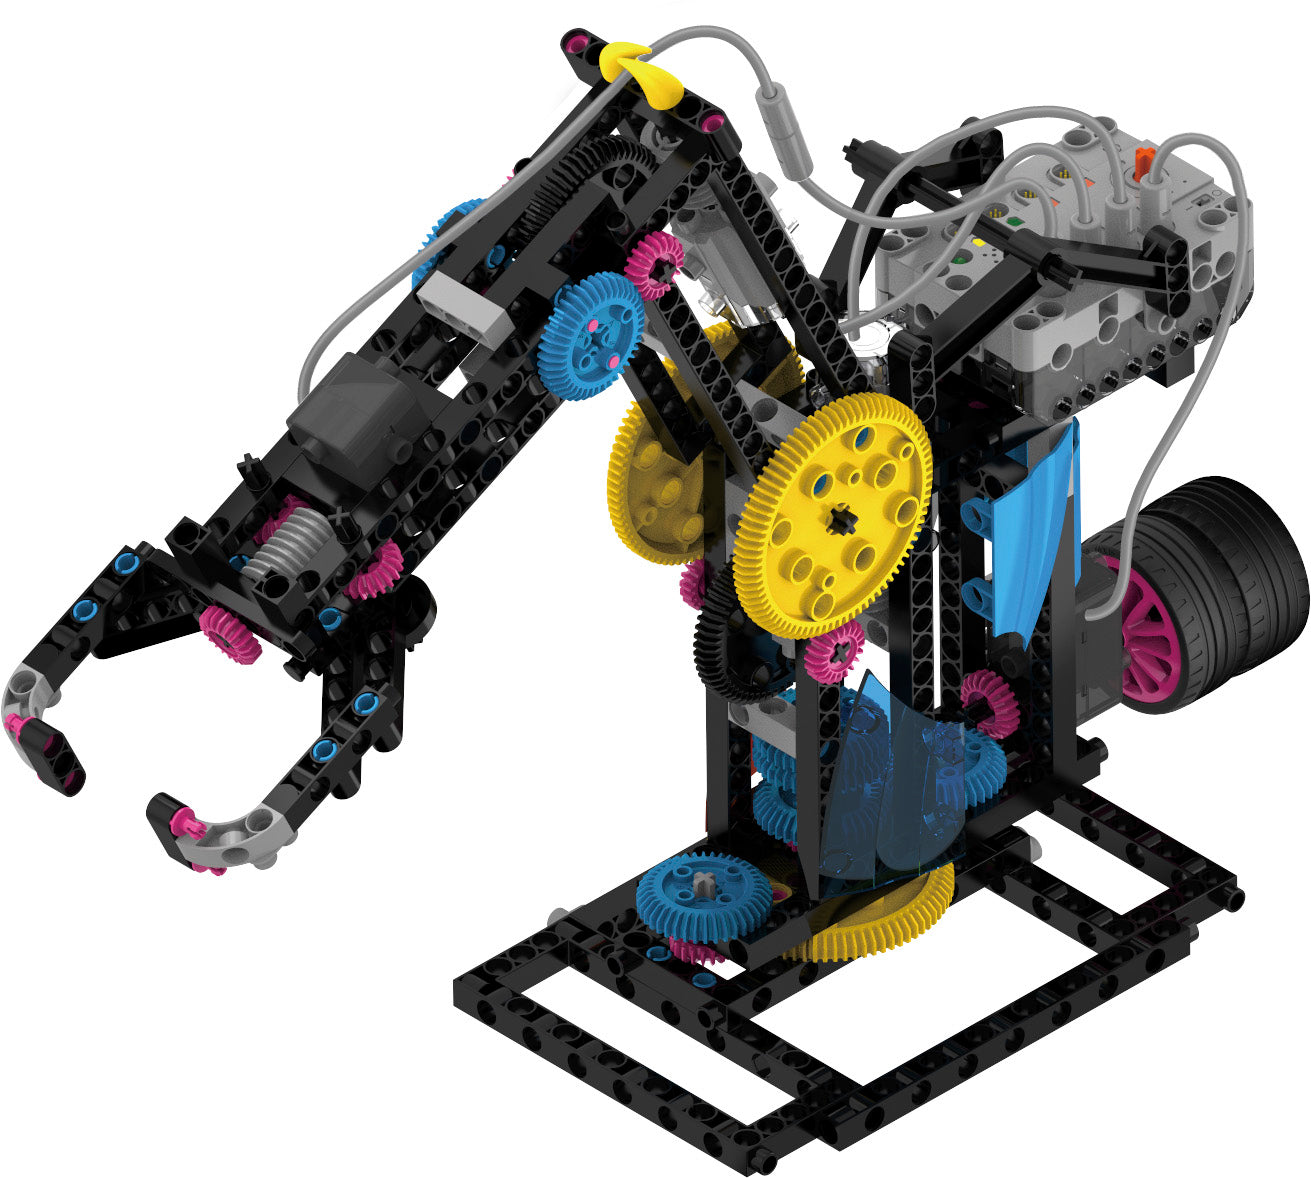 Thames & Kosmos Robotics Workshop - Intro To Robot Design    